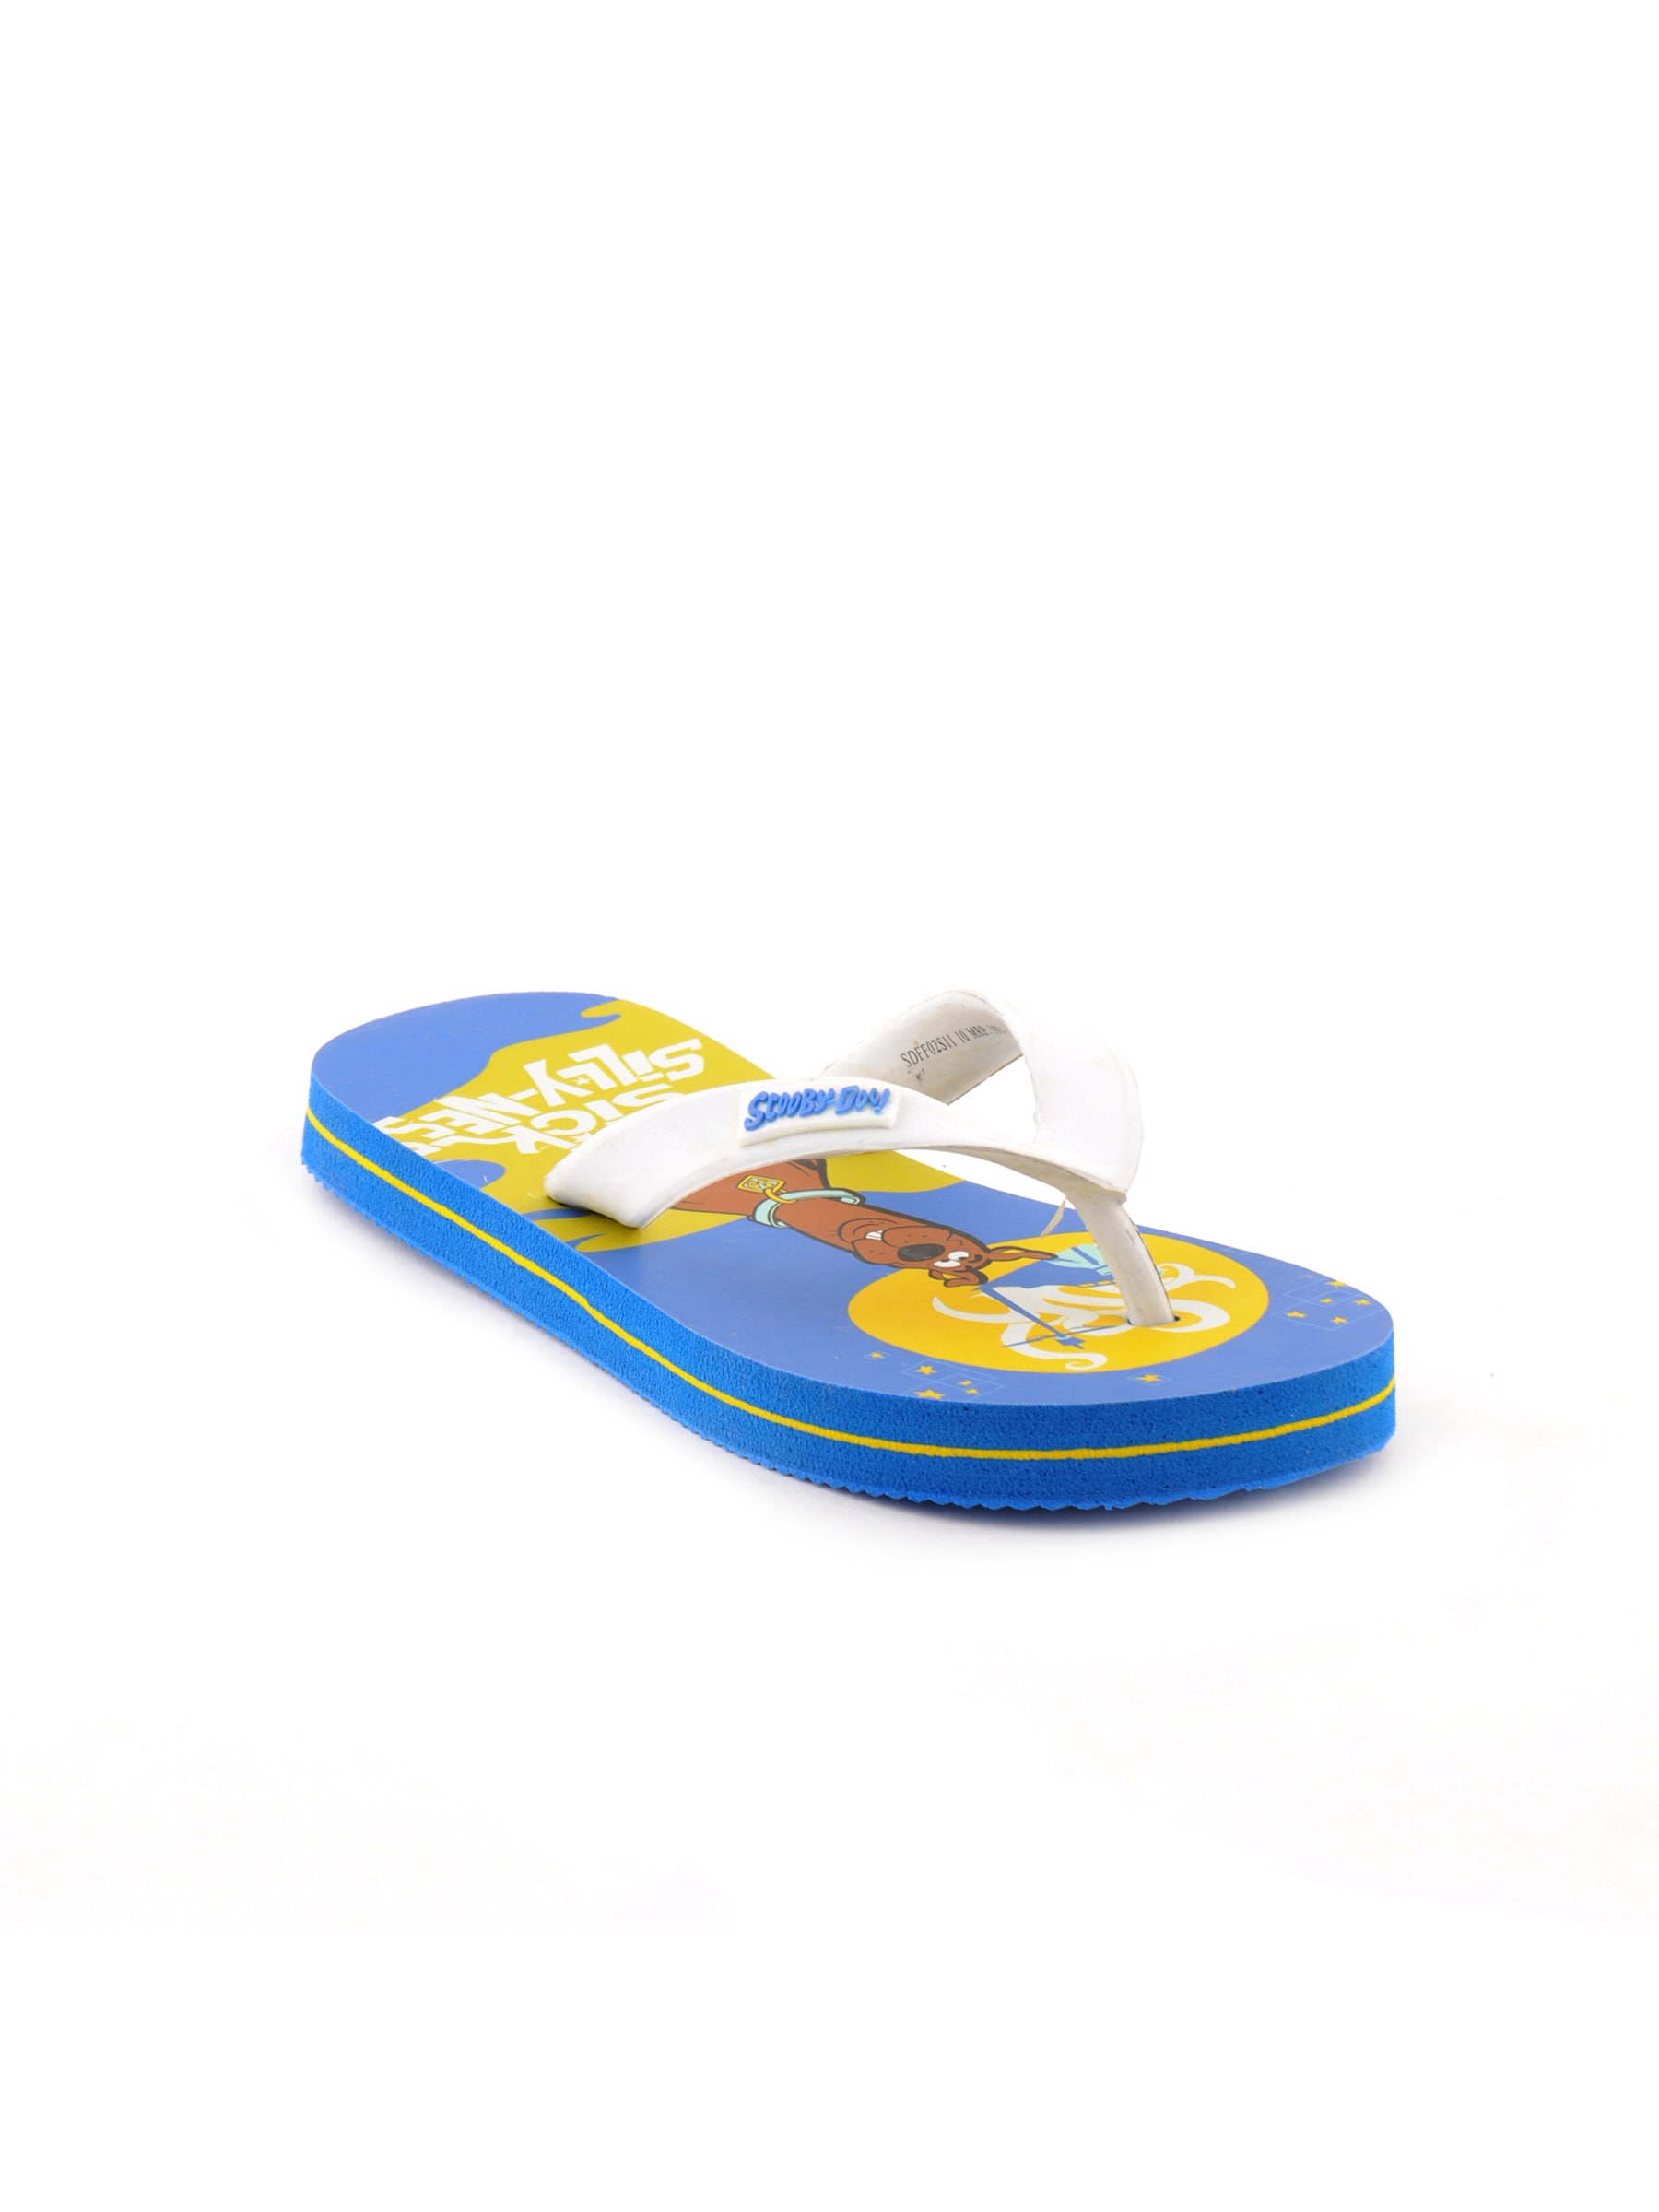 Warner Bros Kids Unisex SD Nightmare Flop Blue Slippers